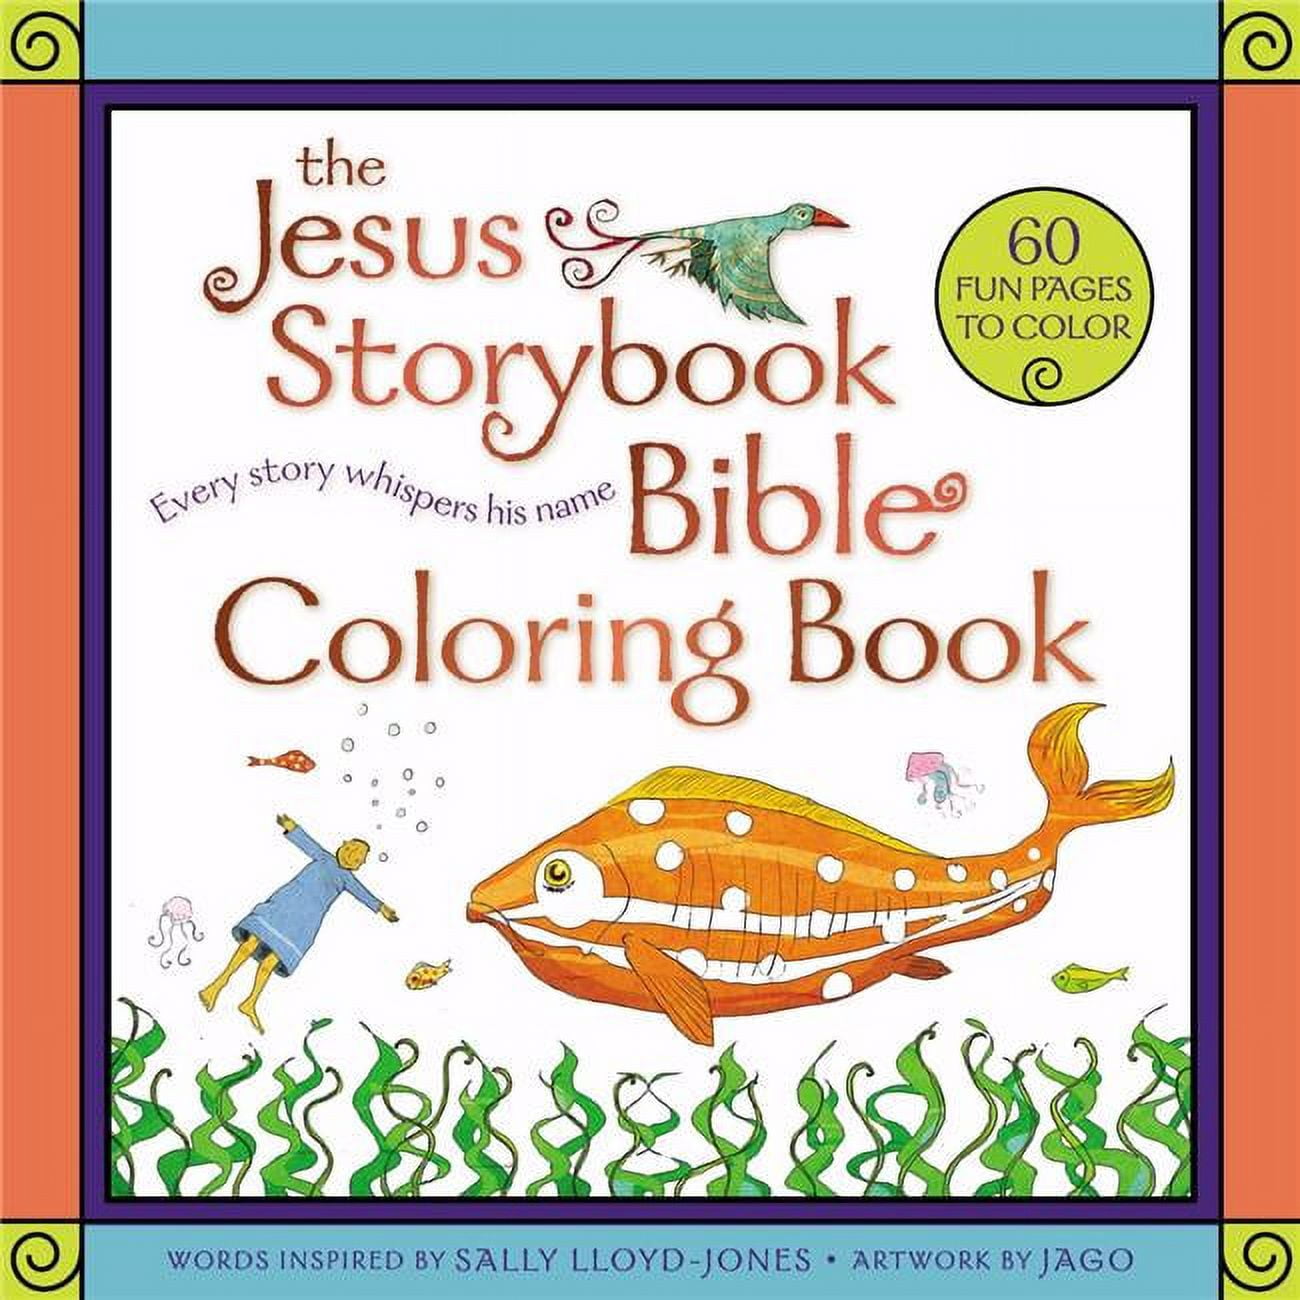 157913 The Jesus Storybook Bible Coloring Book - Feb 2020